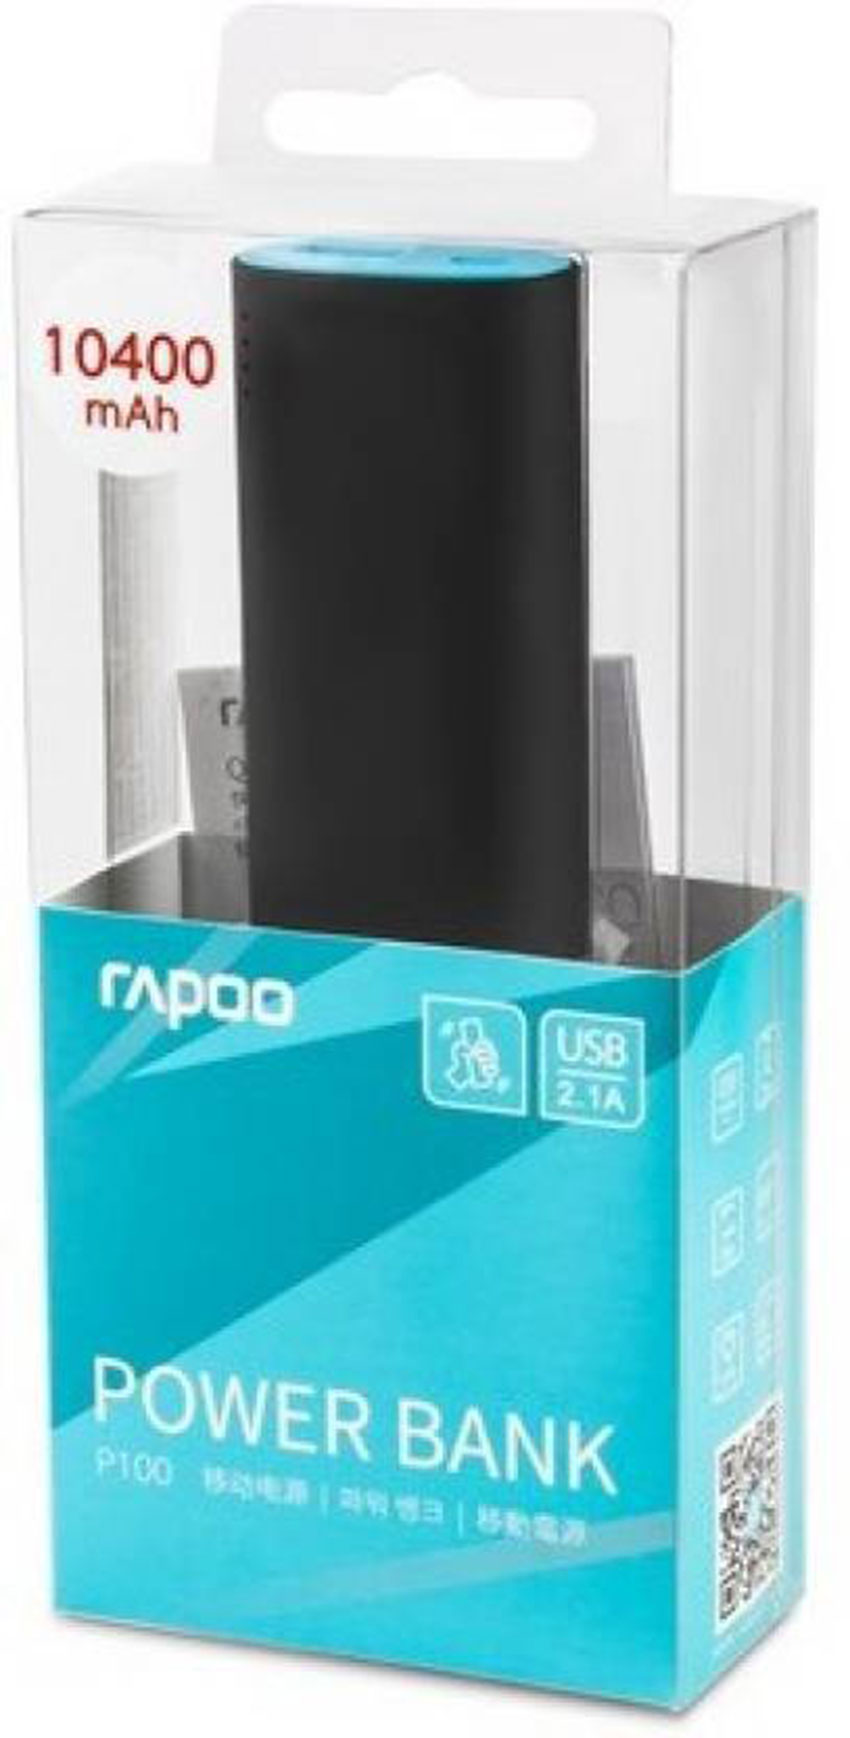 Rapoo-P100-Power-Bank.jpg?1561385533685